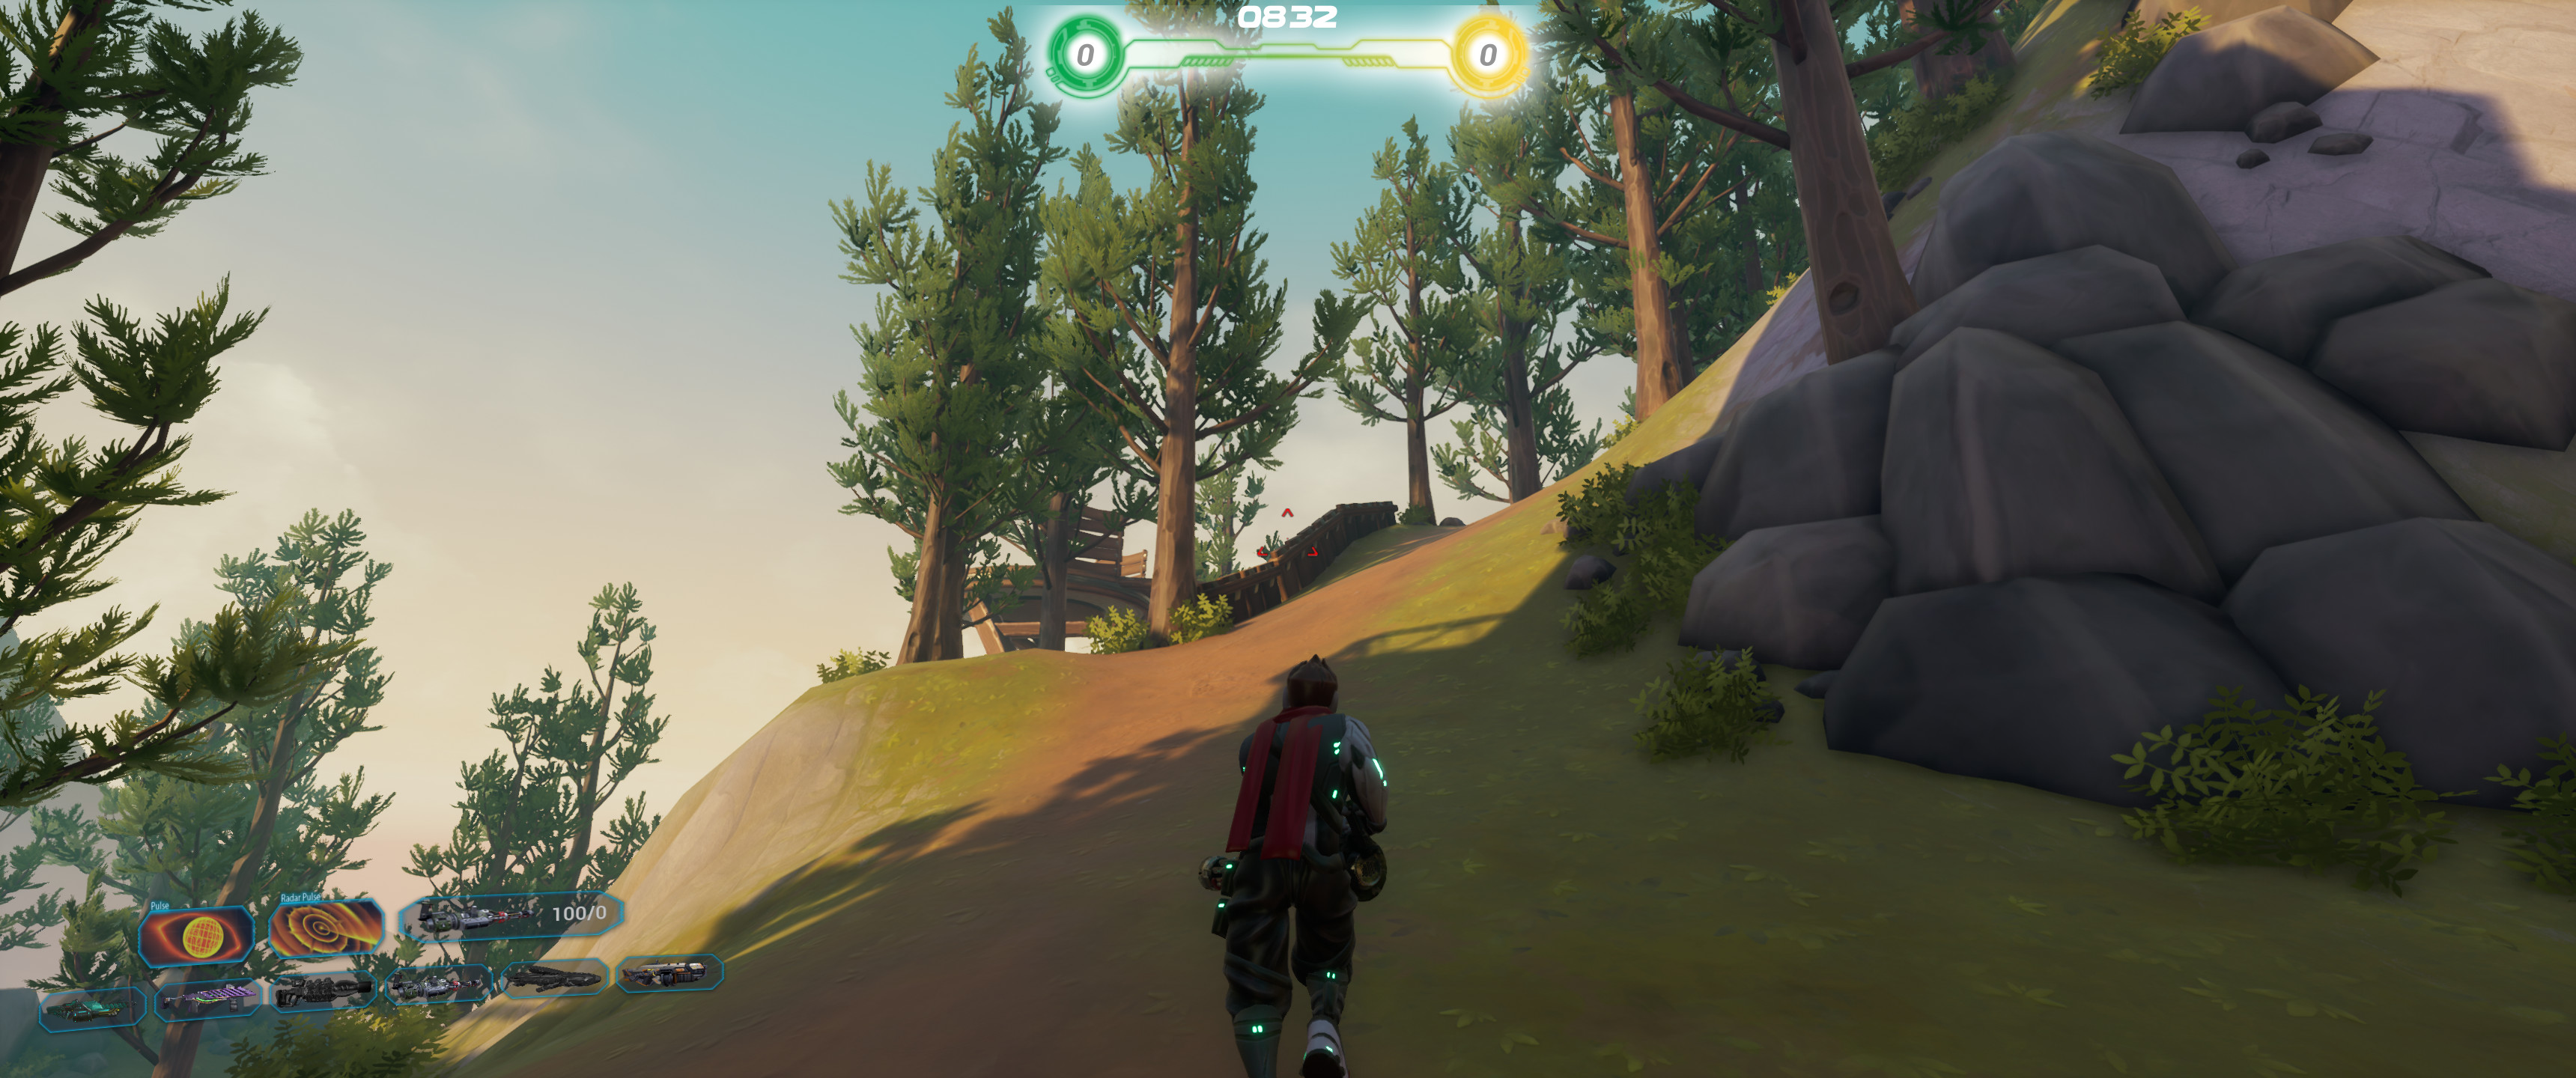 Defense corp - Earth screenshot